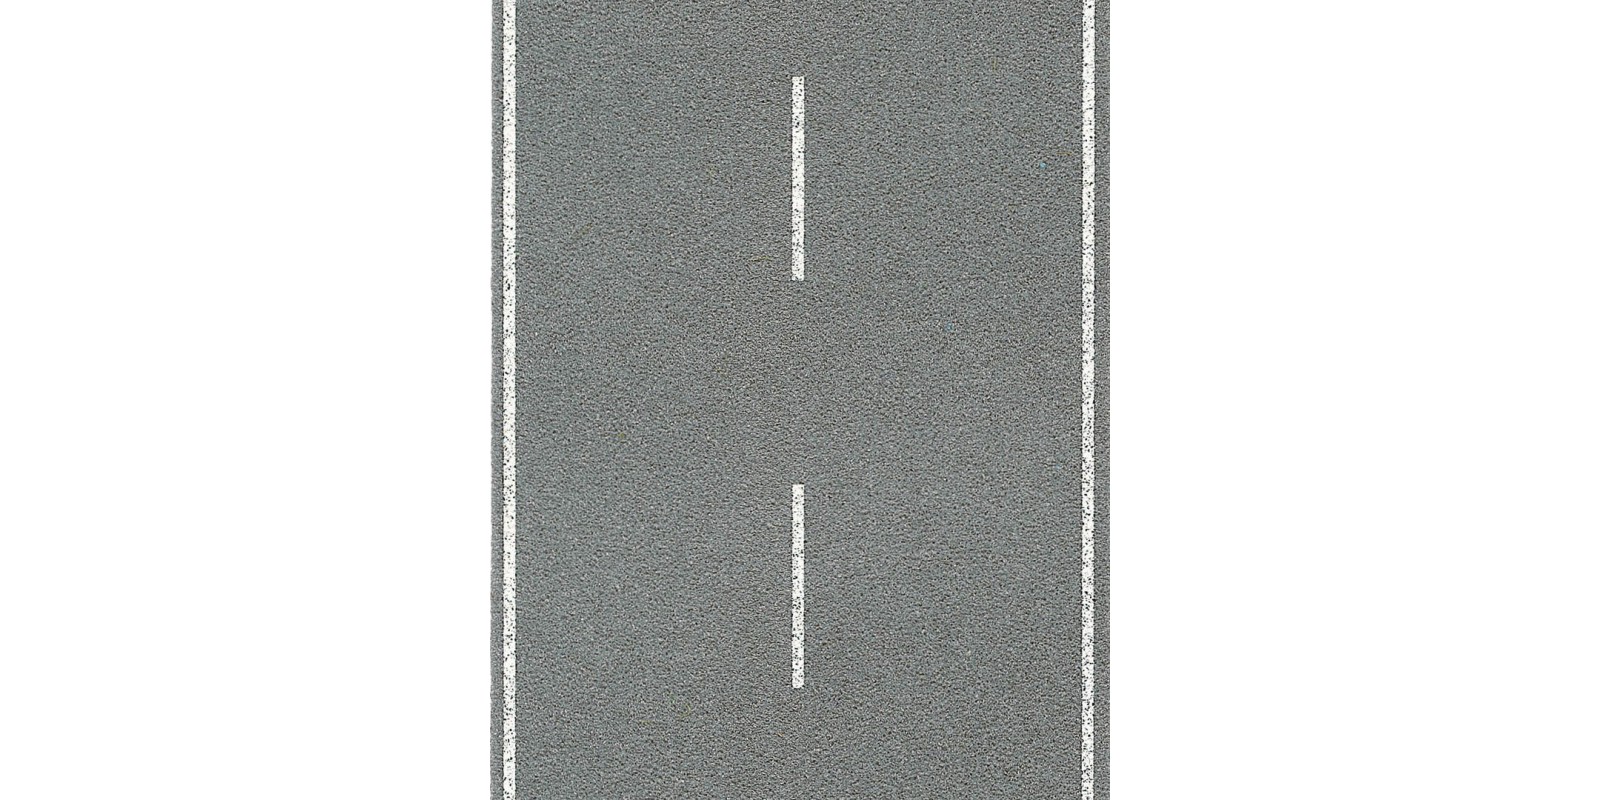 HE6572 Fahrbahndecke Beton H0, zweispurig 100x8 cm 